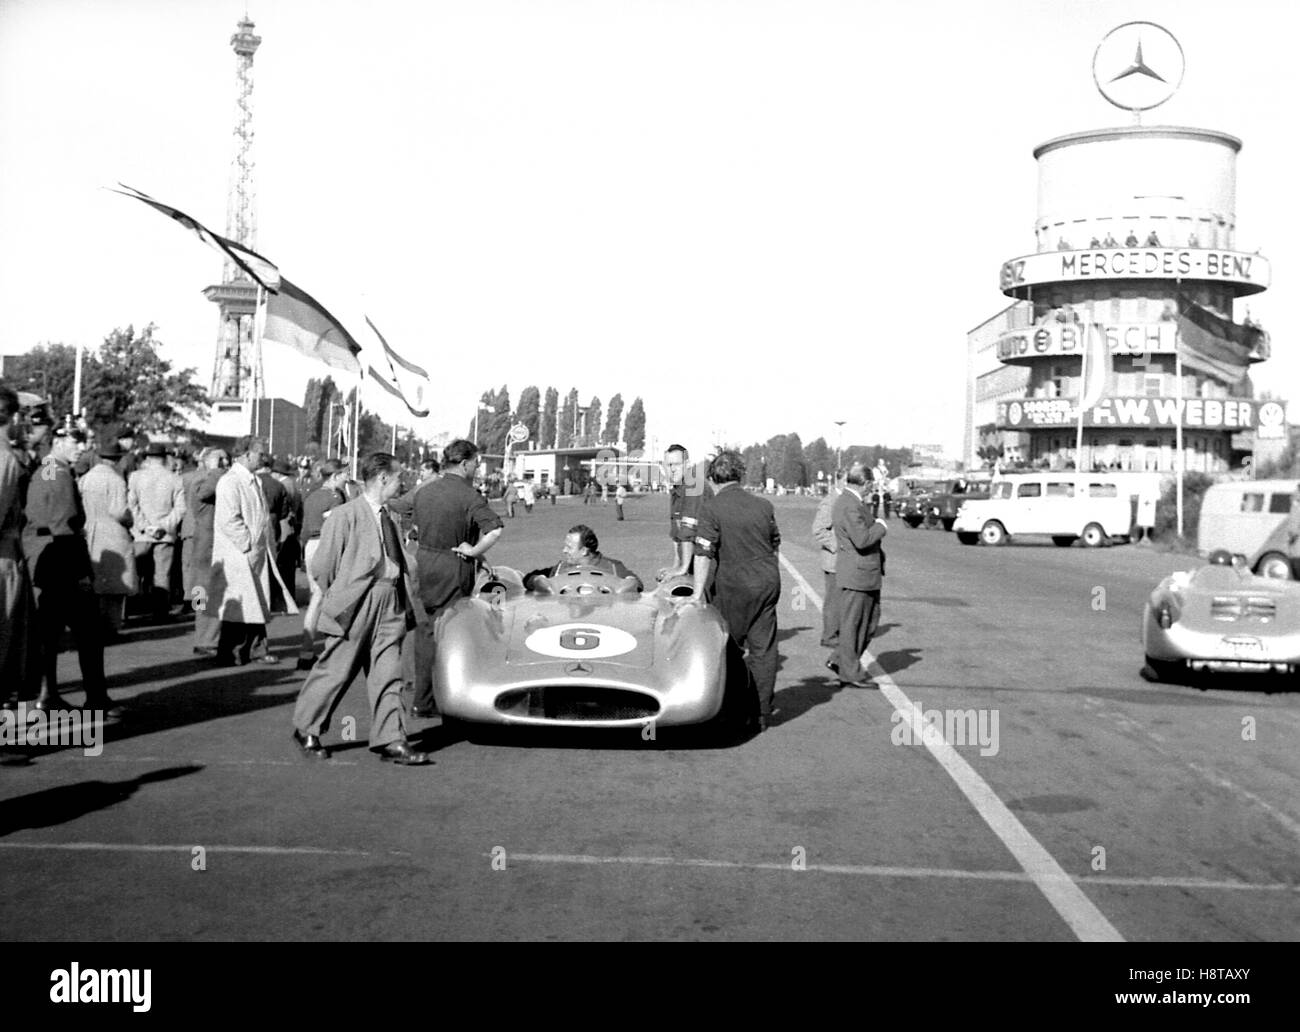 1954 BERLIN GP HERRMANN'S MERCEDES STROMLINIENWAGEN PRE RACE Stock Photo